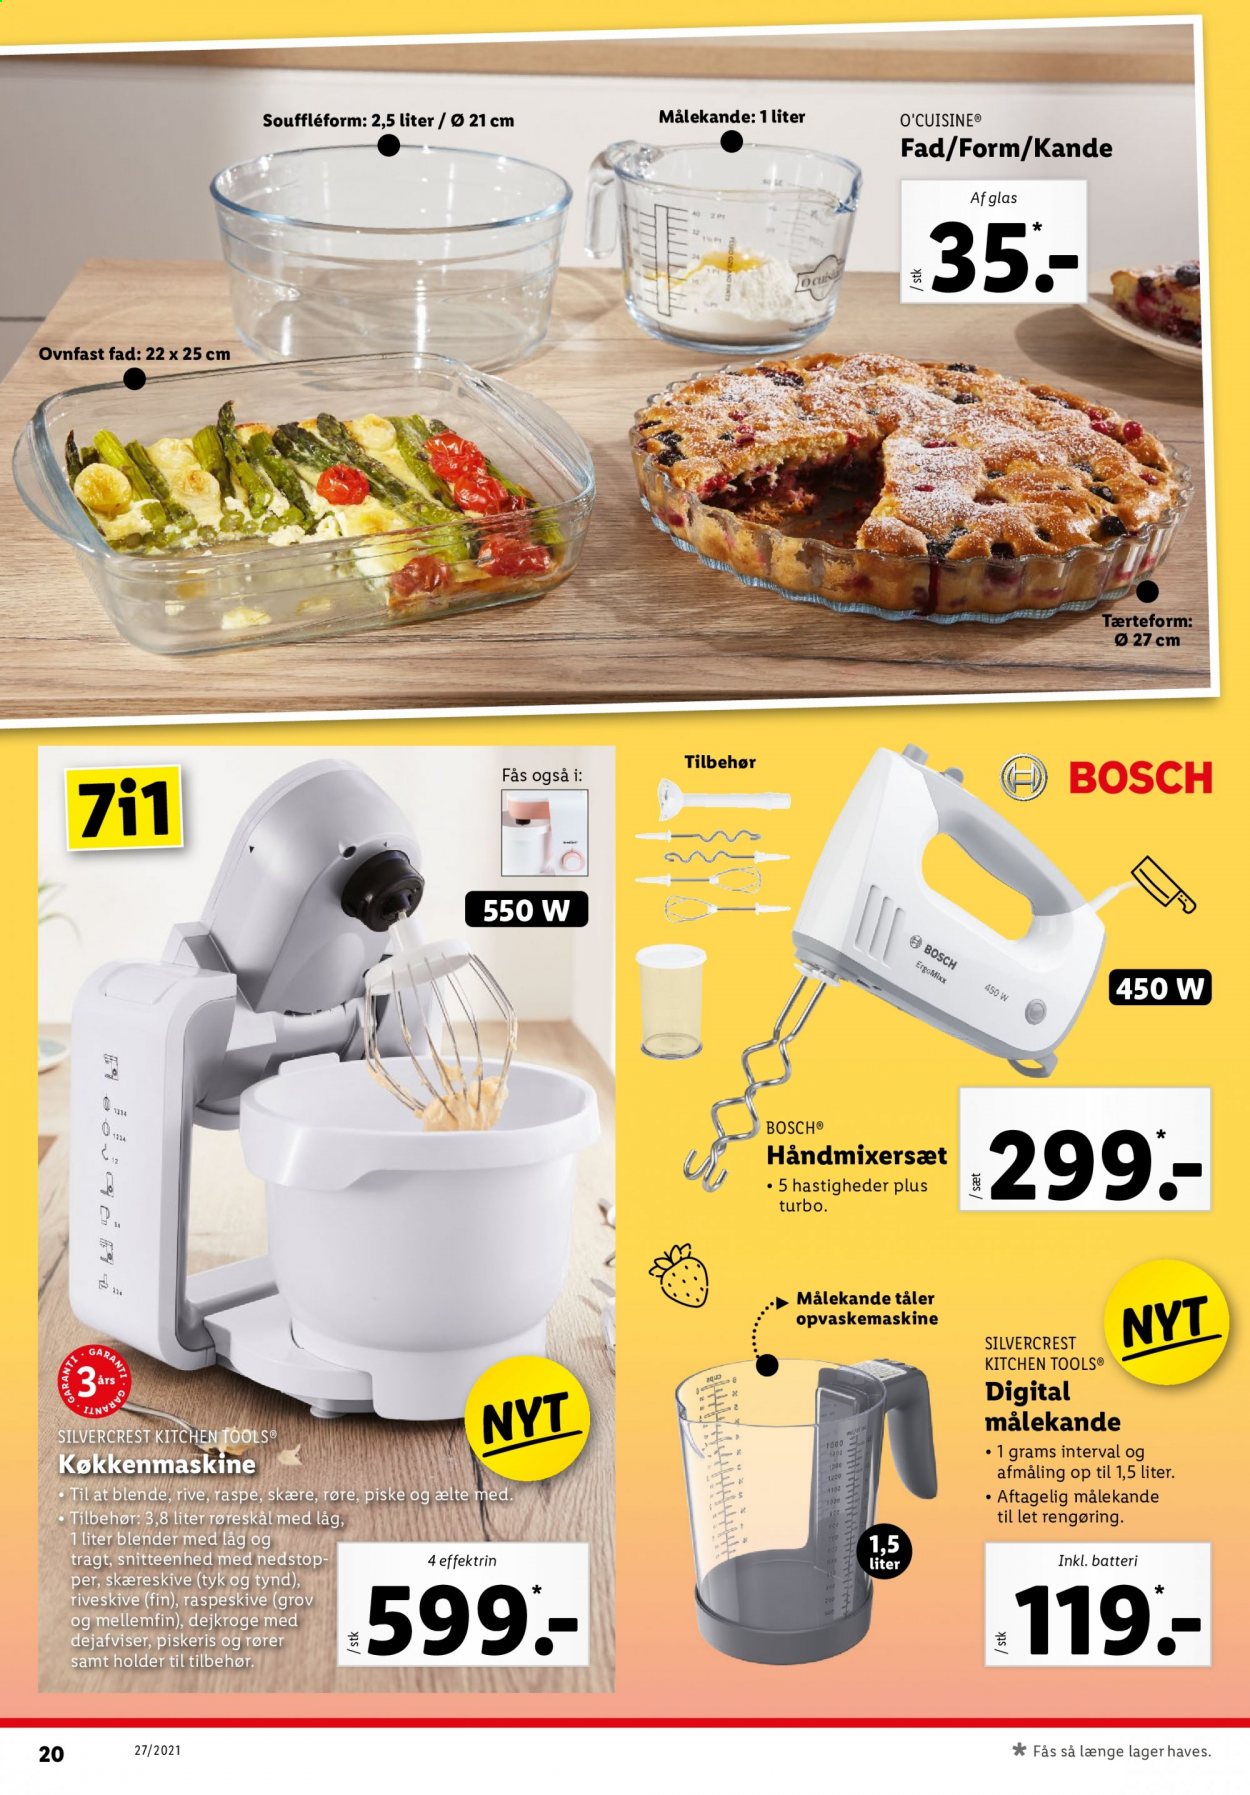 thumbnail - Lidl tilbud  - 4.7.2021 - 10.7.2021 - tilbudsprodukter - Bosch, glas, opvaskemaskine, blender, køkkenmaskine. Side 20.